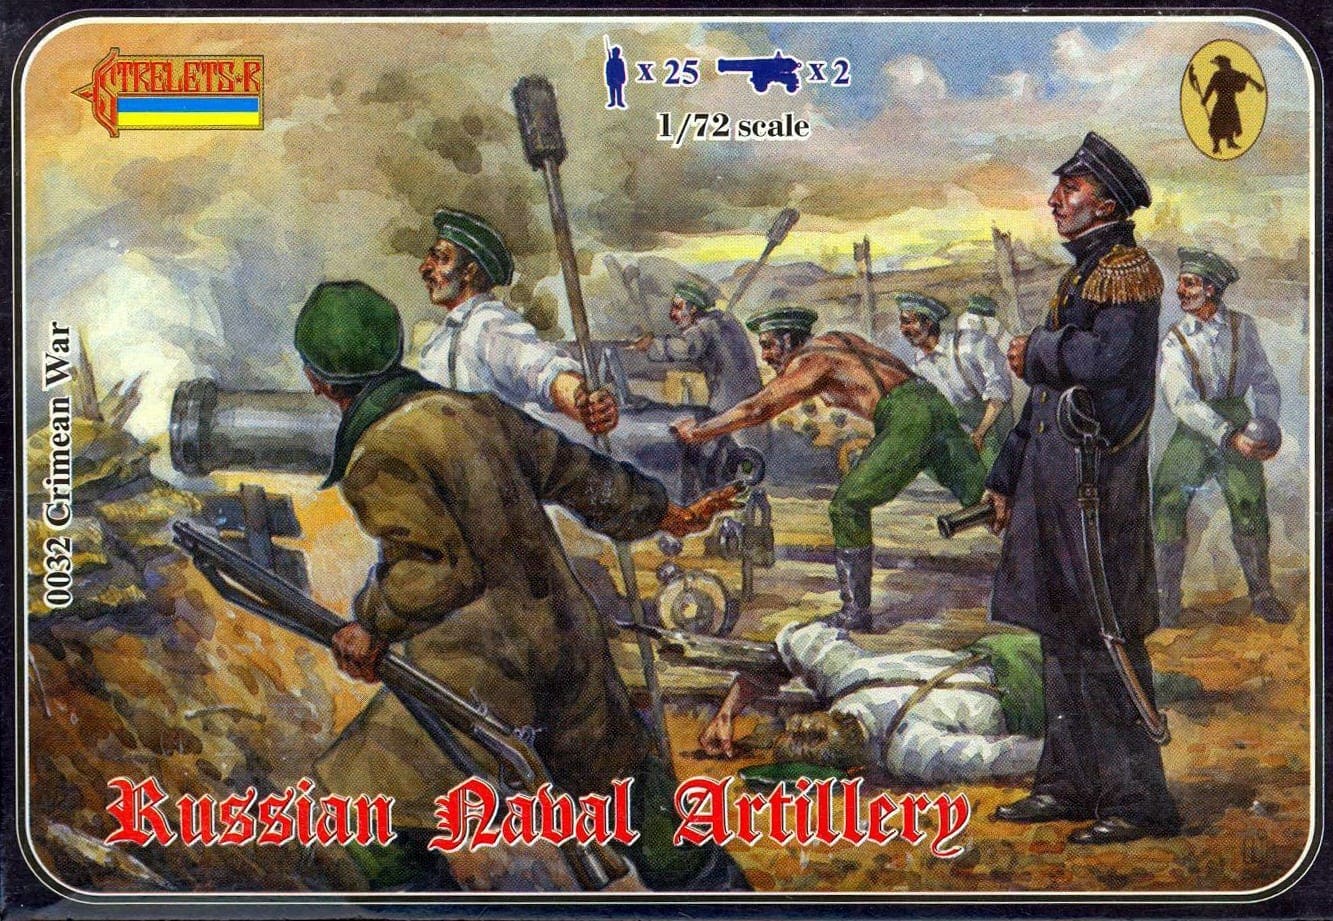 Strelets - 032 - Crimean War Russian Naval Artillery box cover image